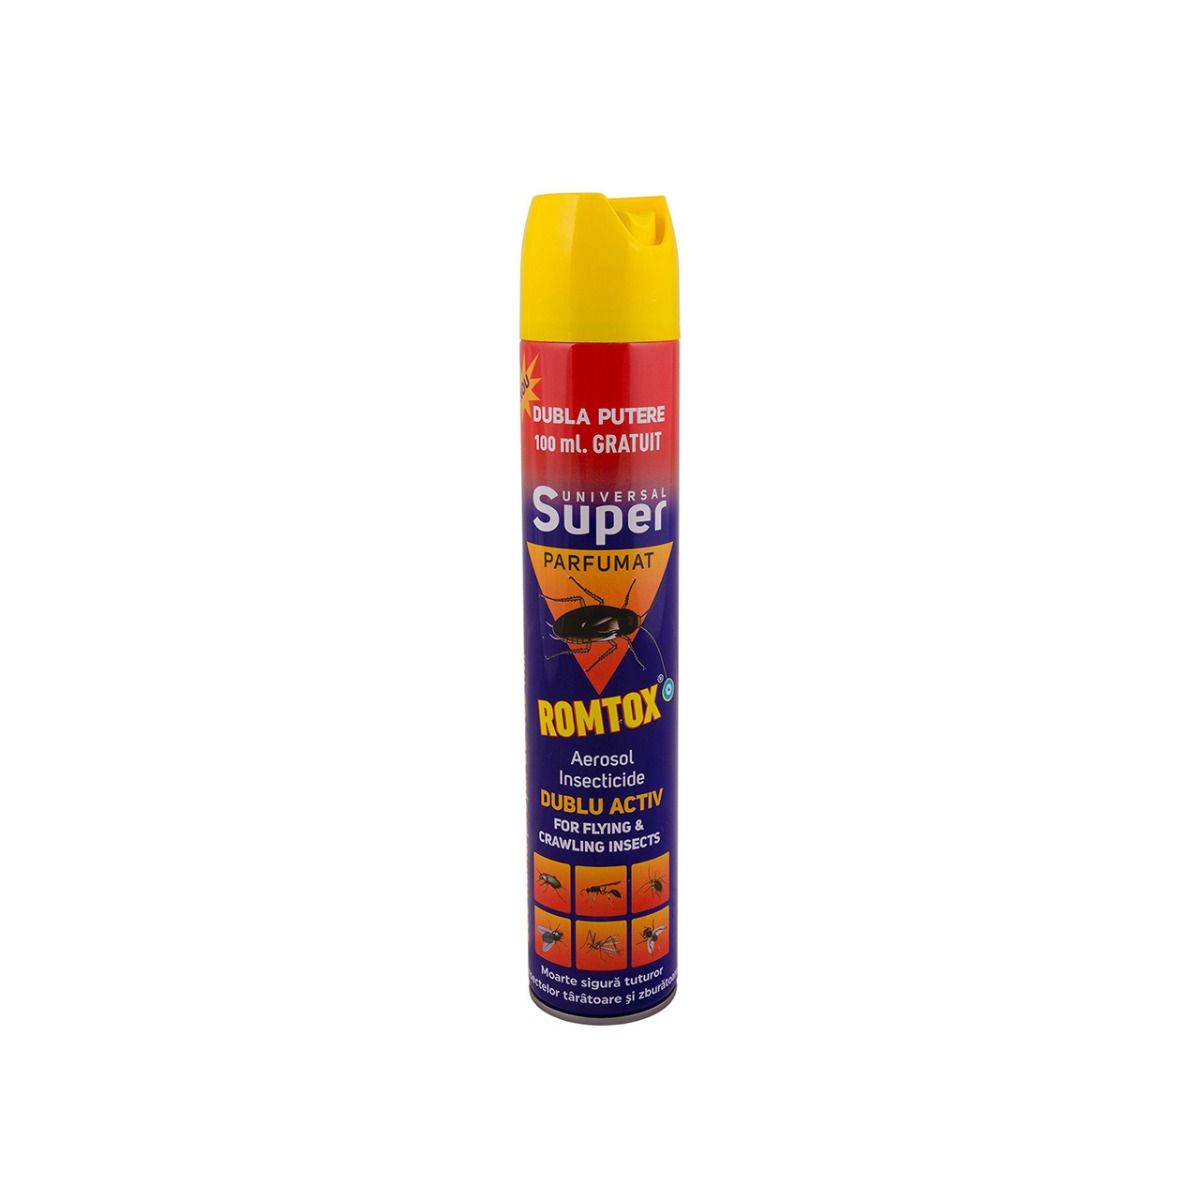 romtox spray insecticid universal aerosol 500 ml crx002477